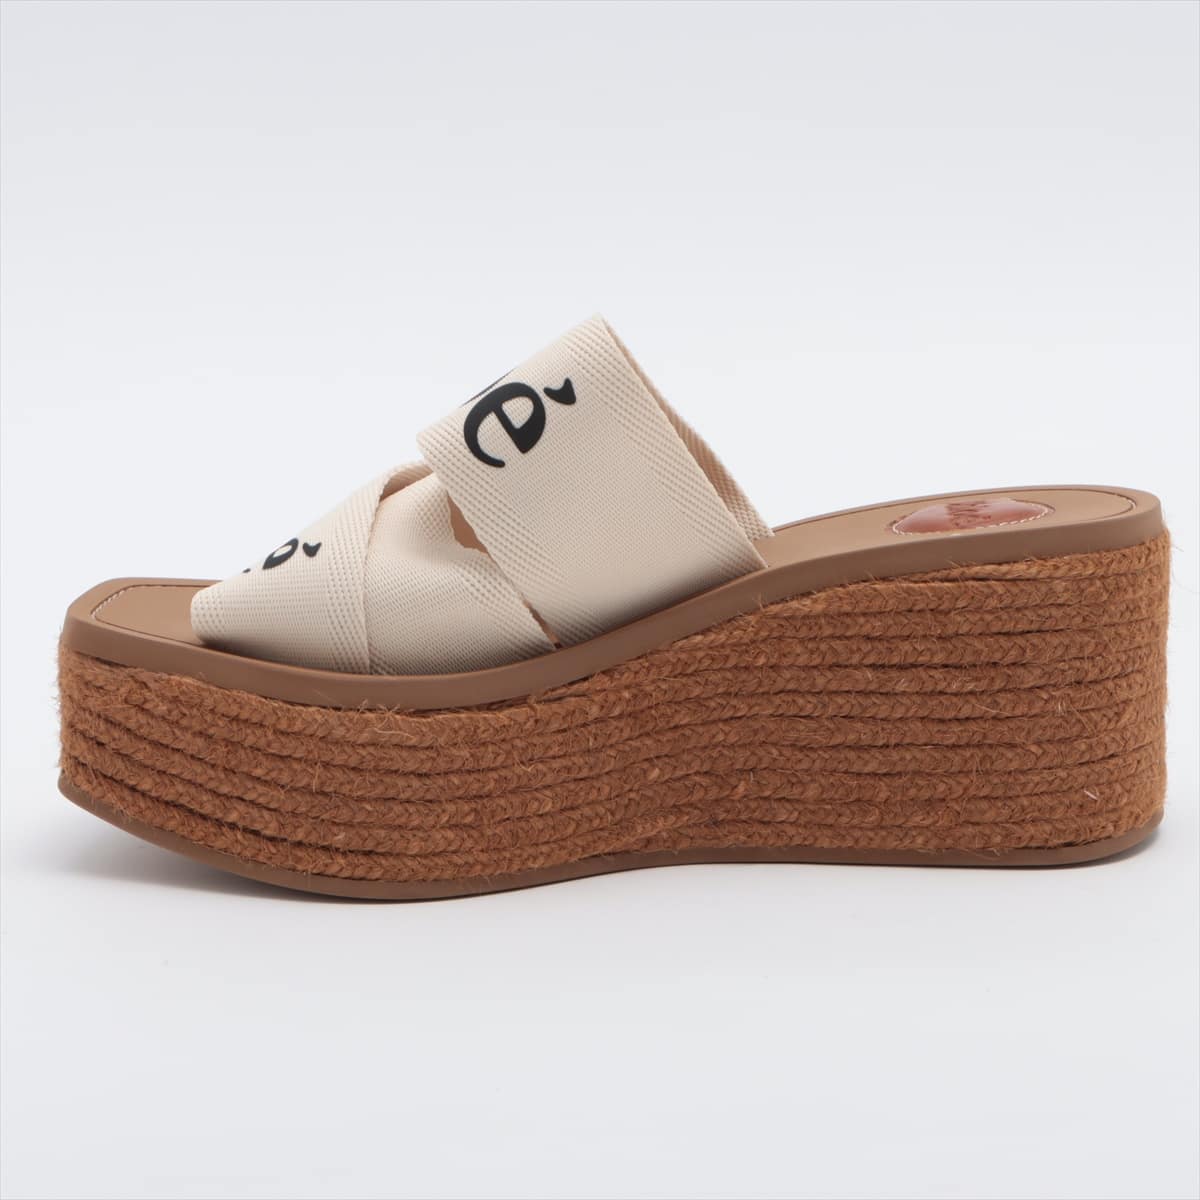 Chloe Woody Fabric Wedge Sole Sandals 38 Ladies' White x brown